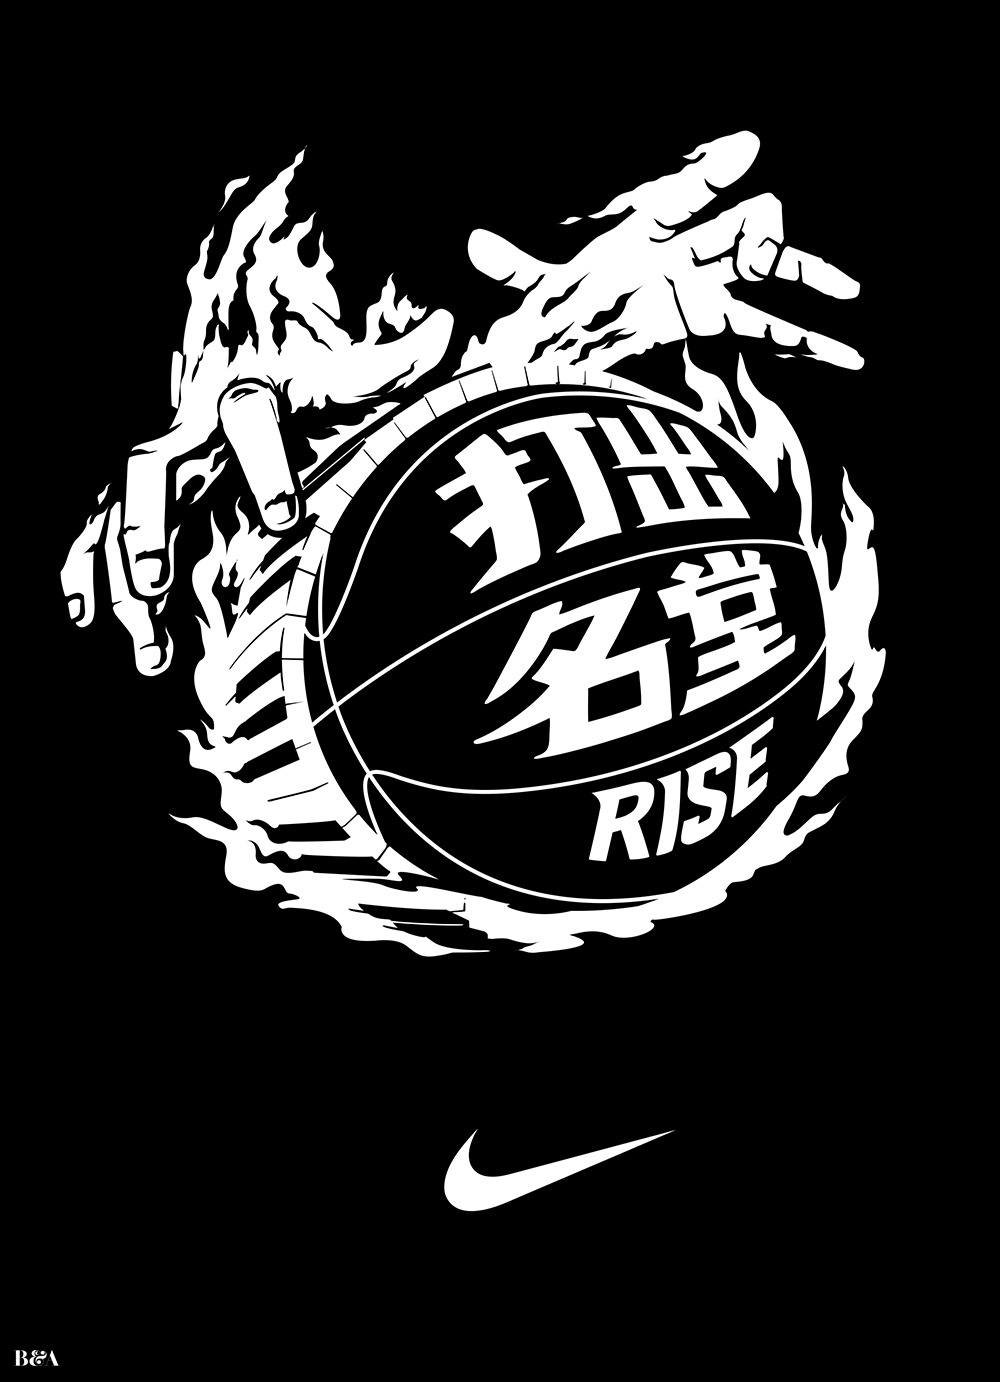 No se mueve Testificar Cabeza Bernstein & Andriulli's Tumblr. — Nike RISE logo by Shotopop. Click here  for...